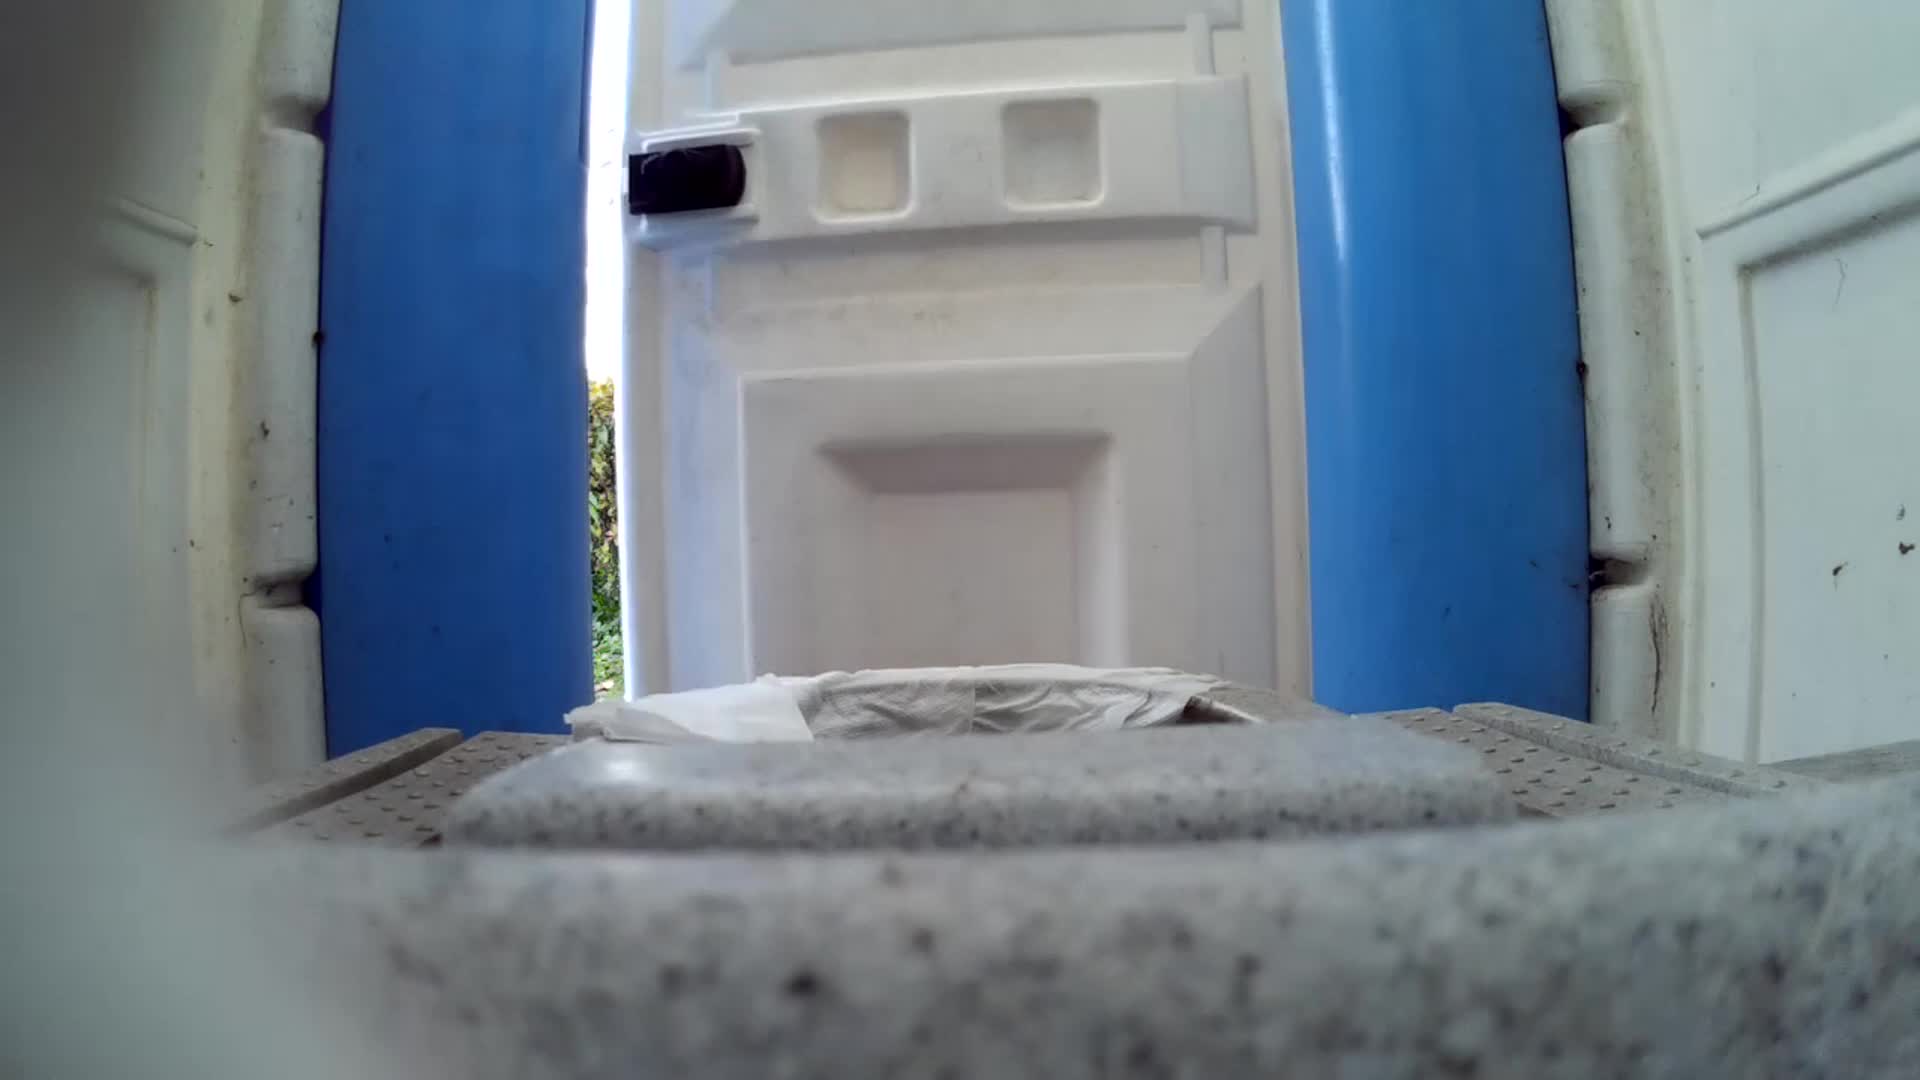 Hidden cam in toilet. Камера в унитазе туалета.